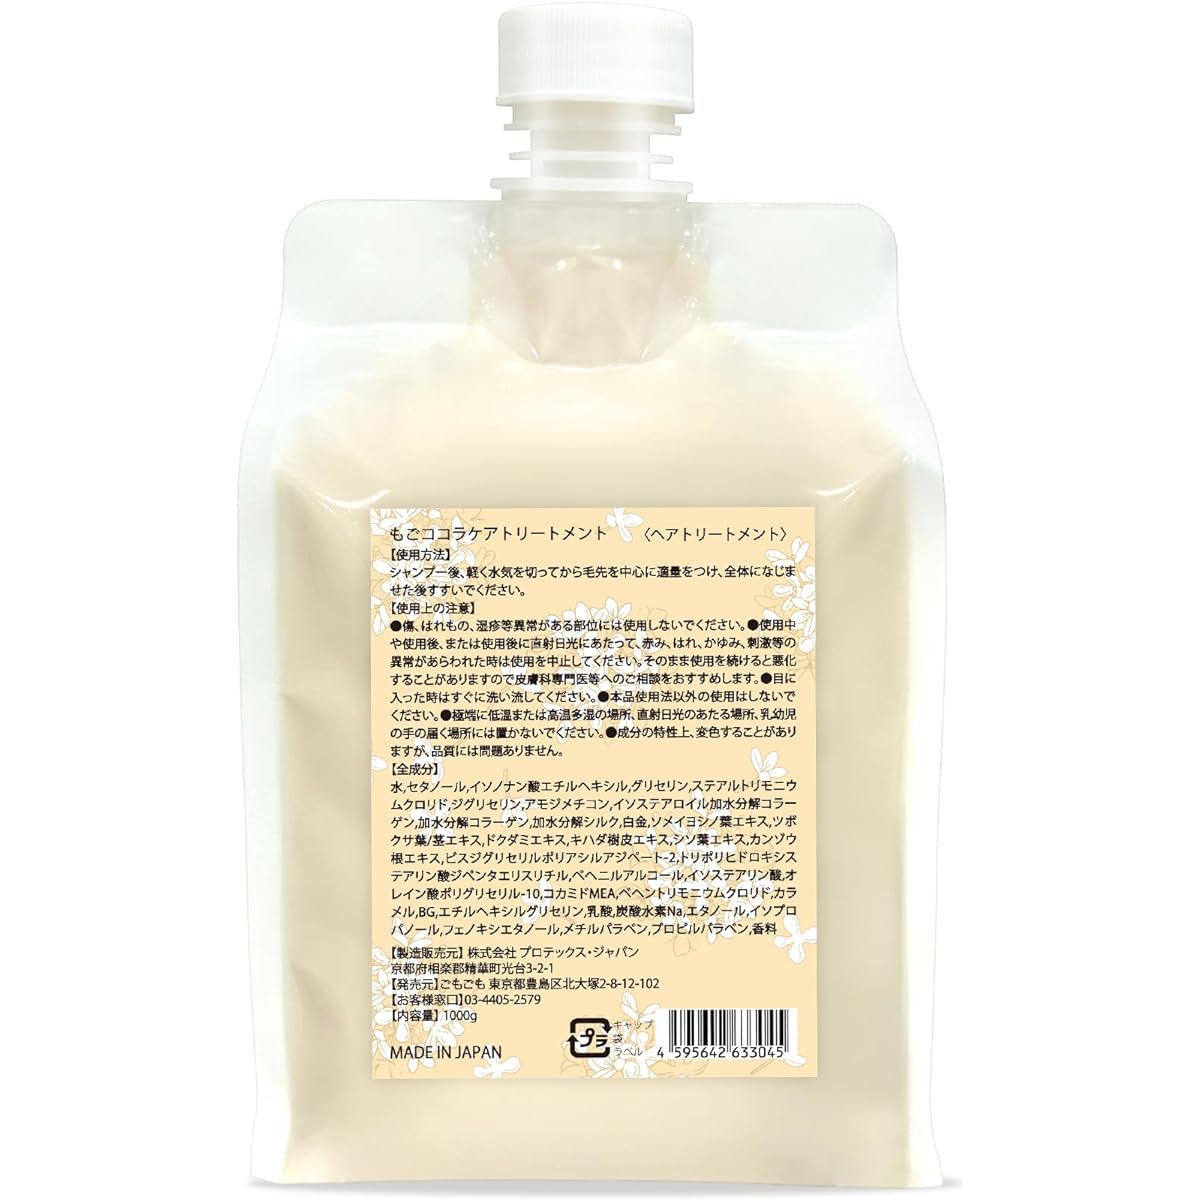 Mogo Coco La Care Treatment Osmanthus scent Contains hydrolyzed collagen Beauty salon exclusive (1000g)